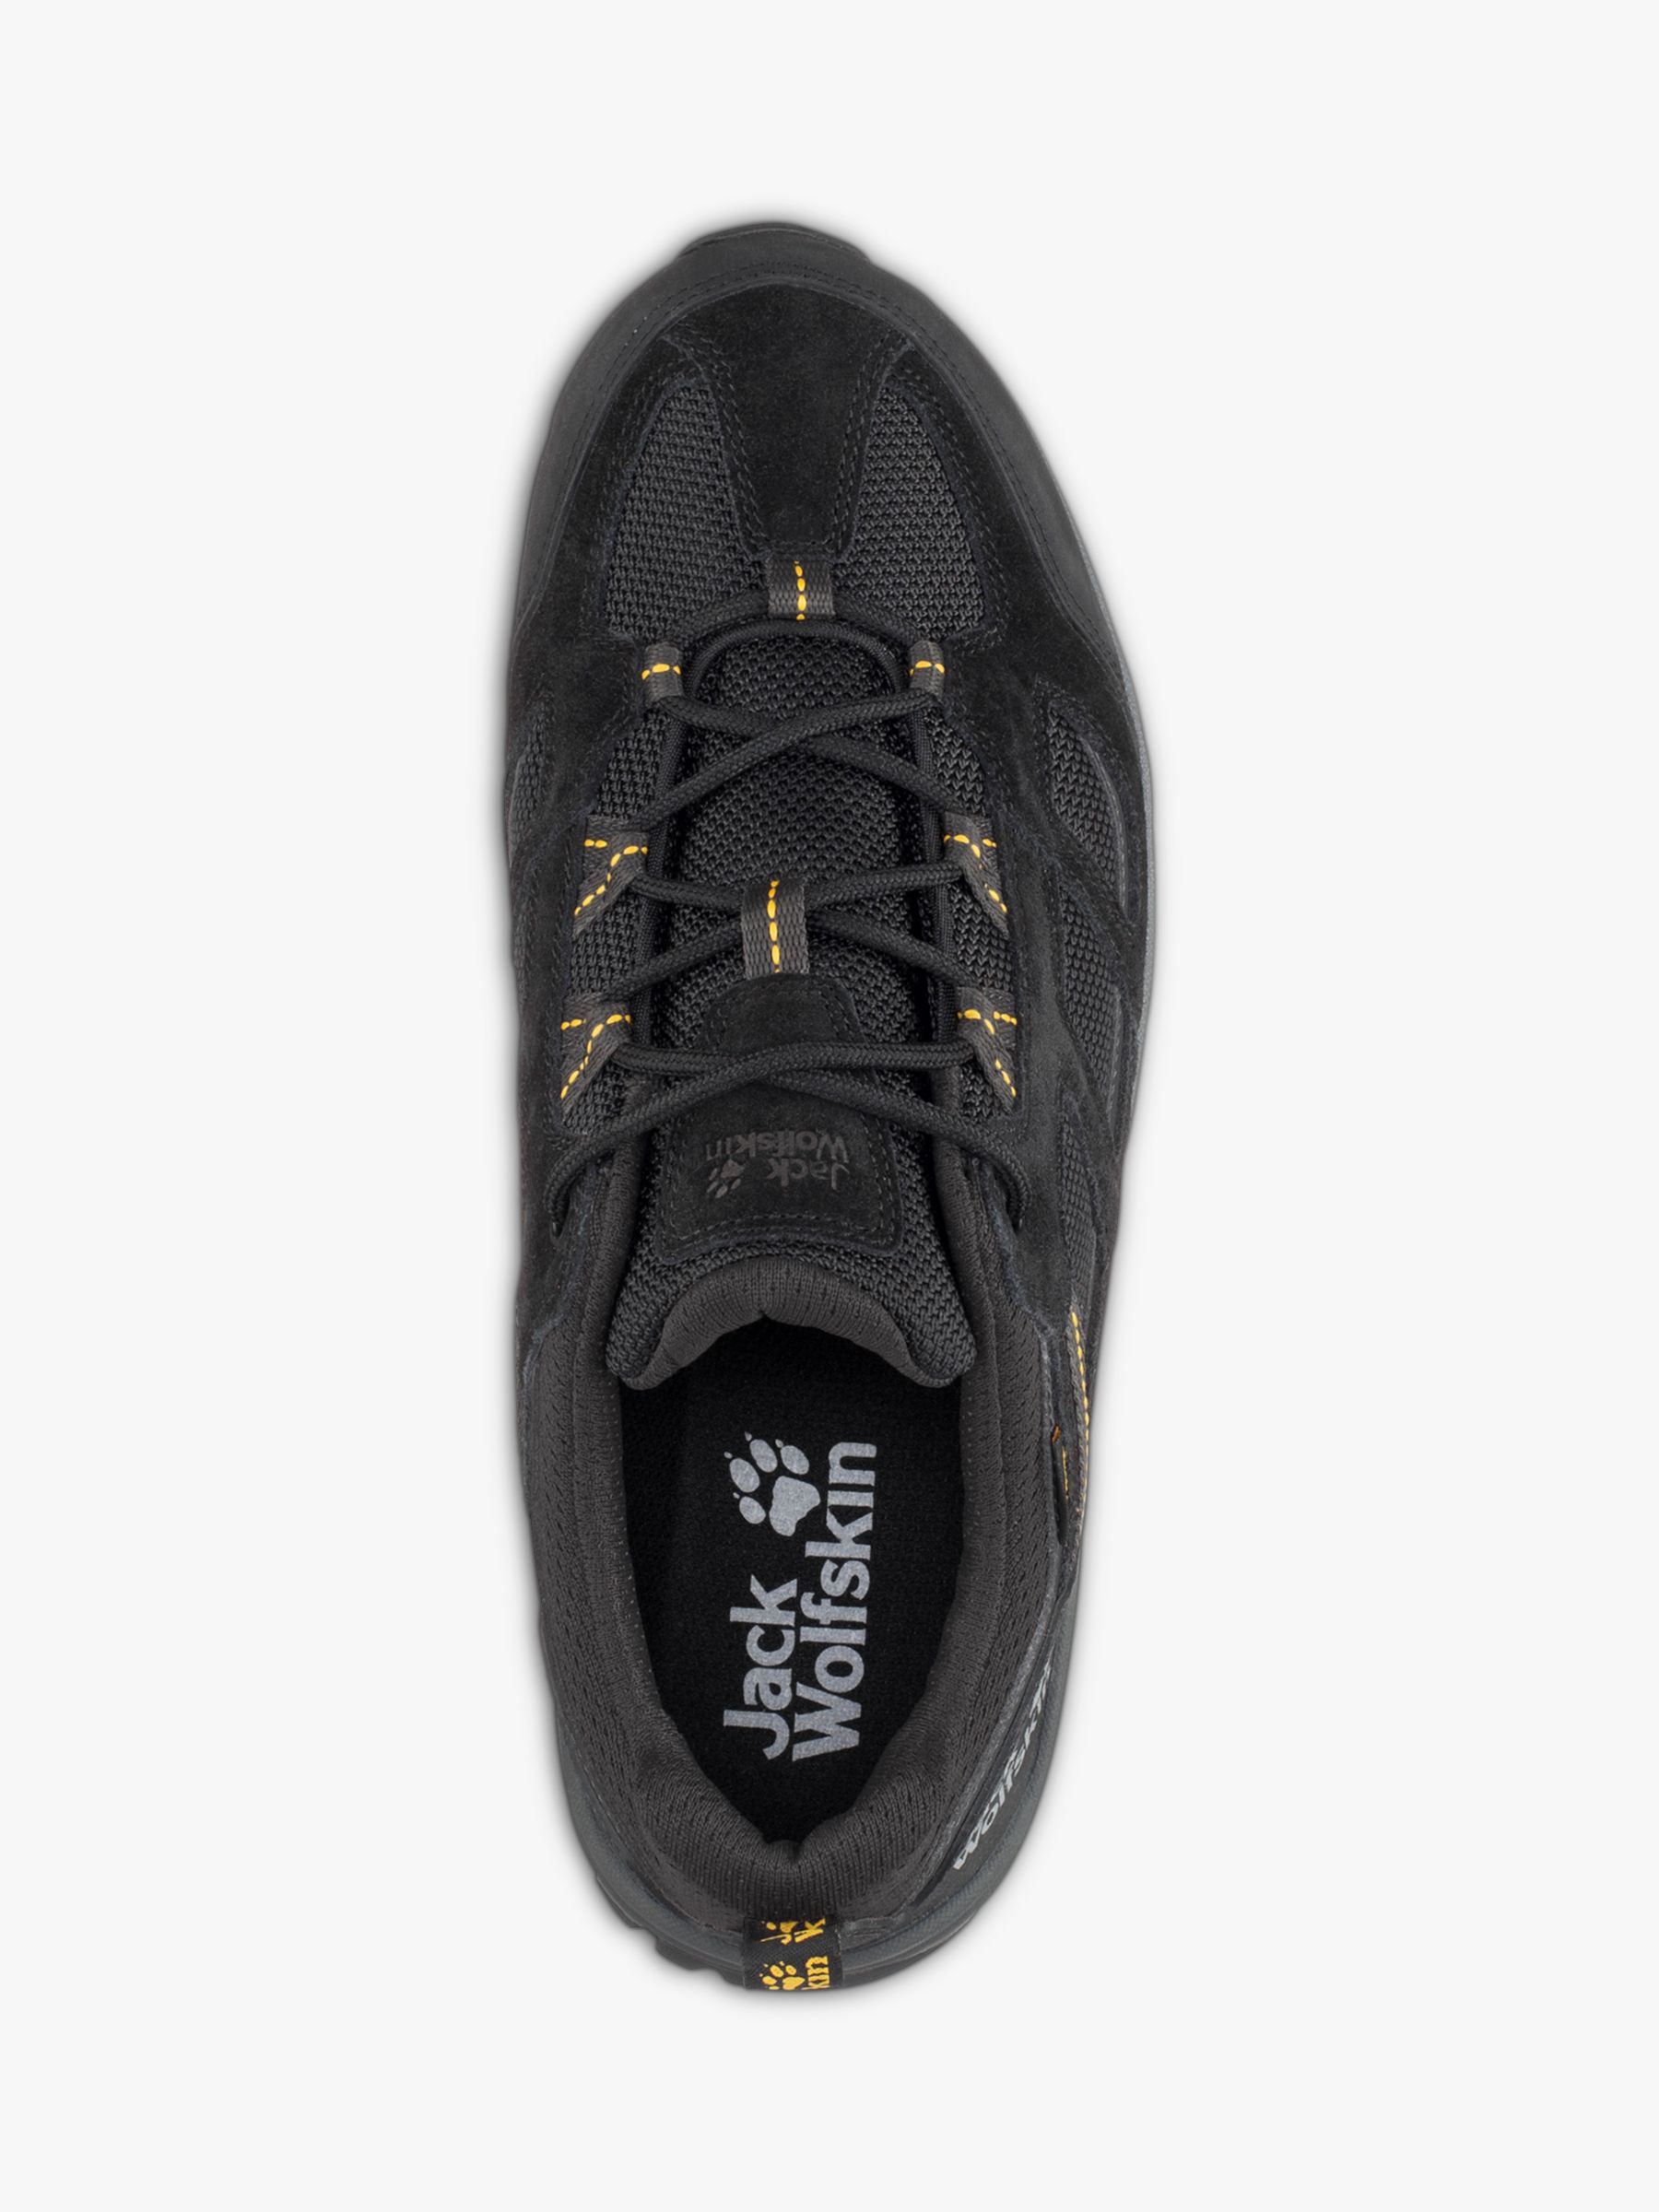 Jack Wolfskin Vojo 3 Texapore Men's Waterproof Walking Shoes, Black / Burly Yellow, 7